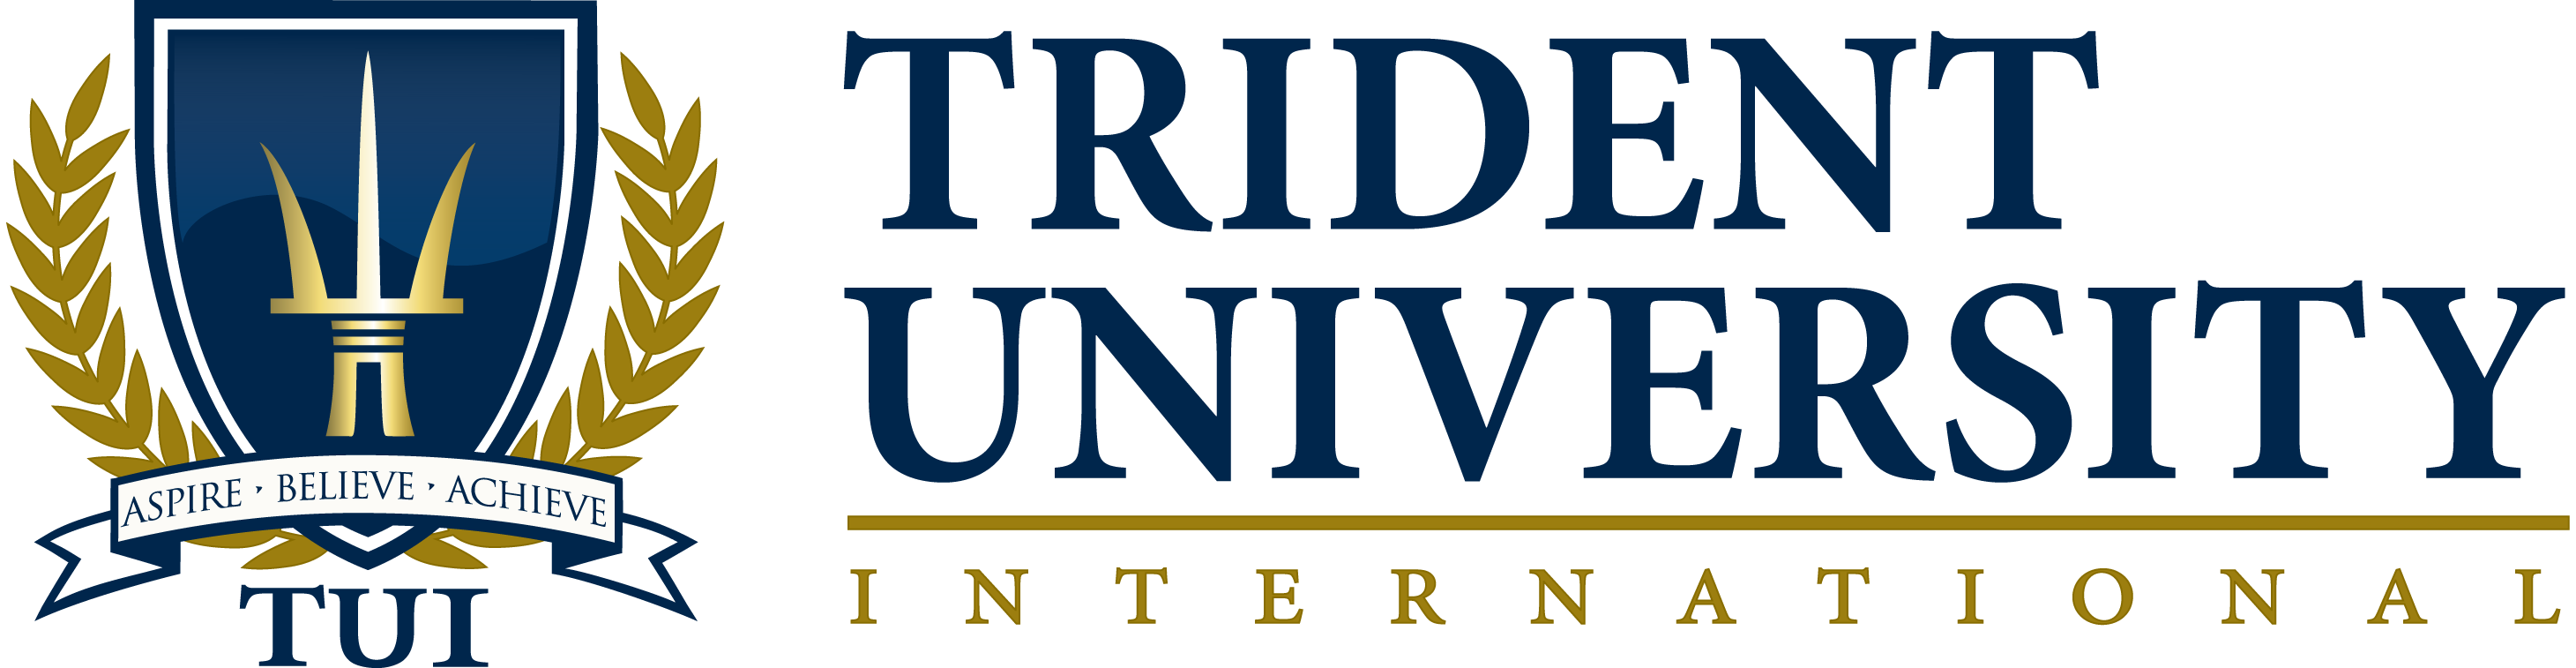 Trident script. Trident. Universal International logo. International University logo. British Stickers University.